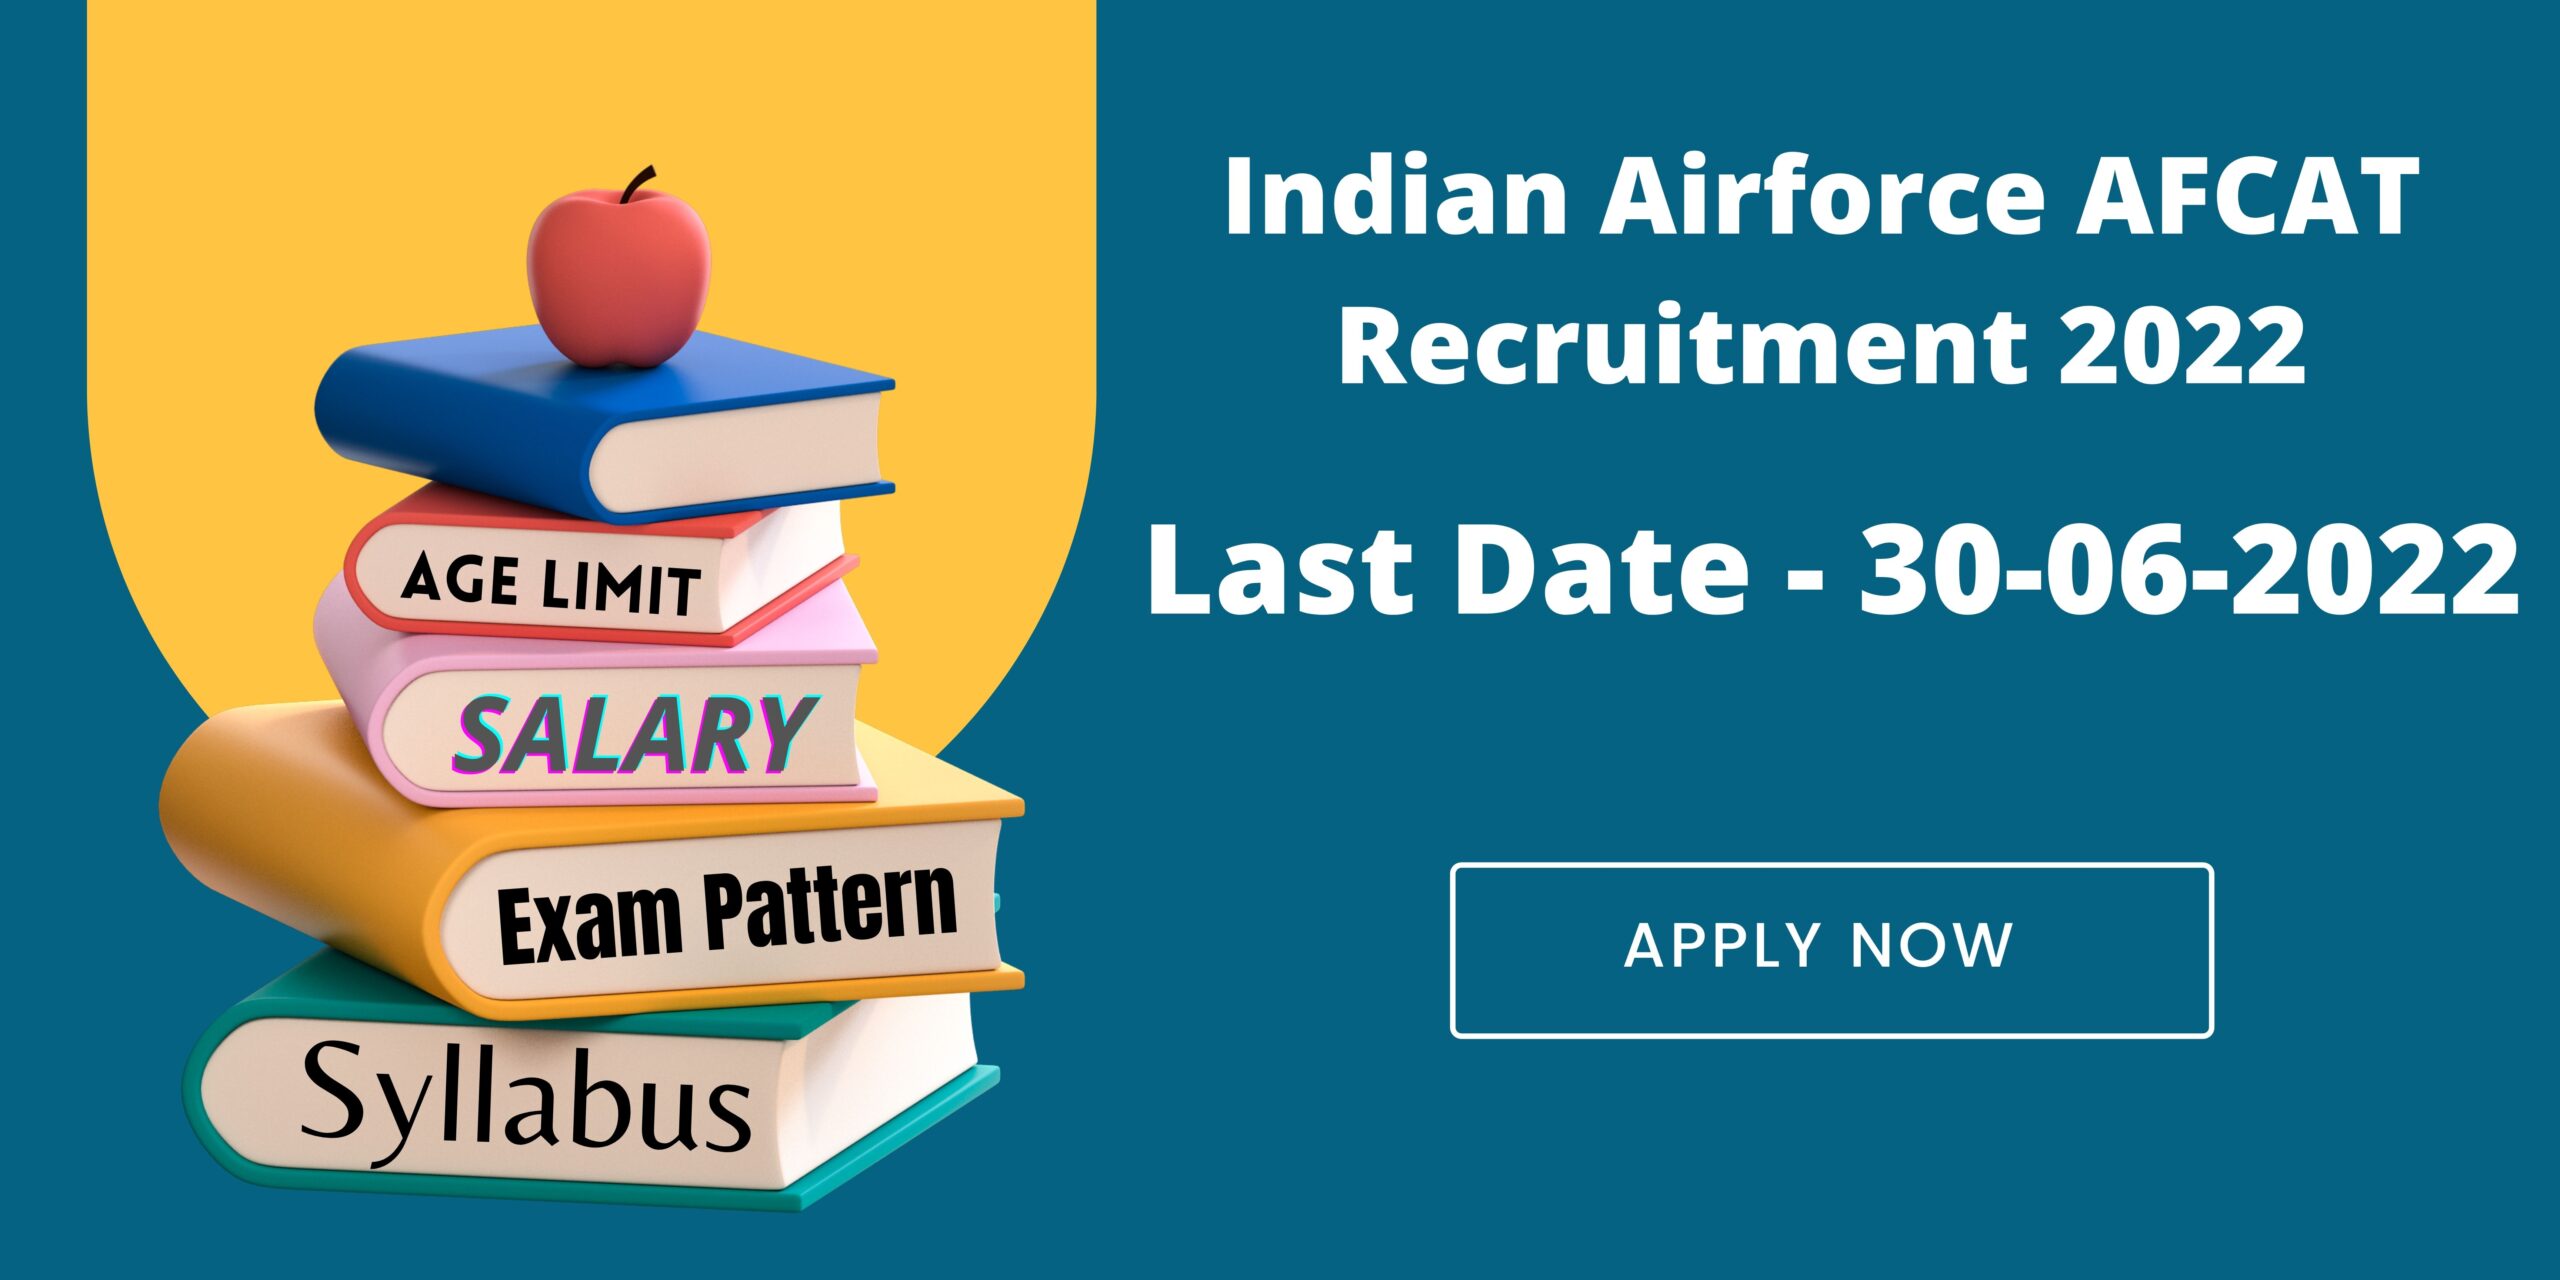 Indian Airforce AFCAT Recruitment 2022